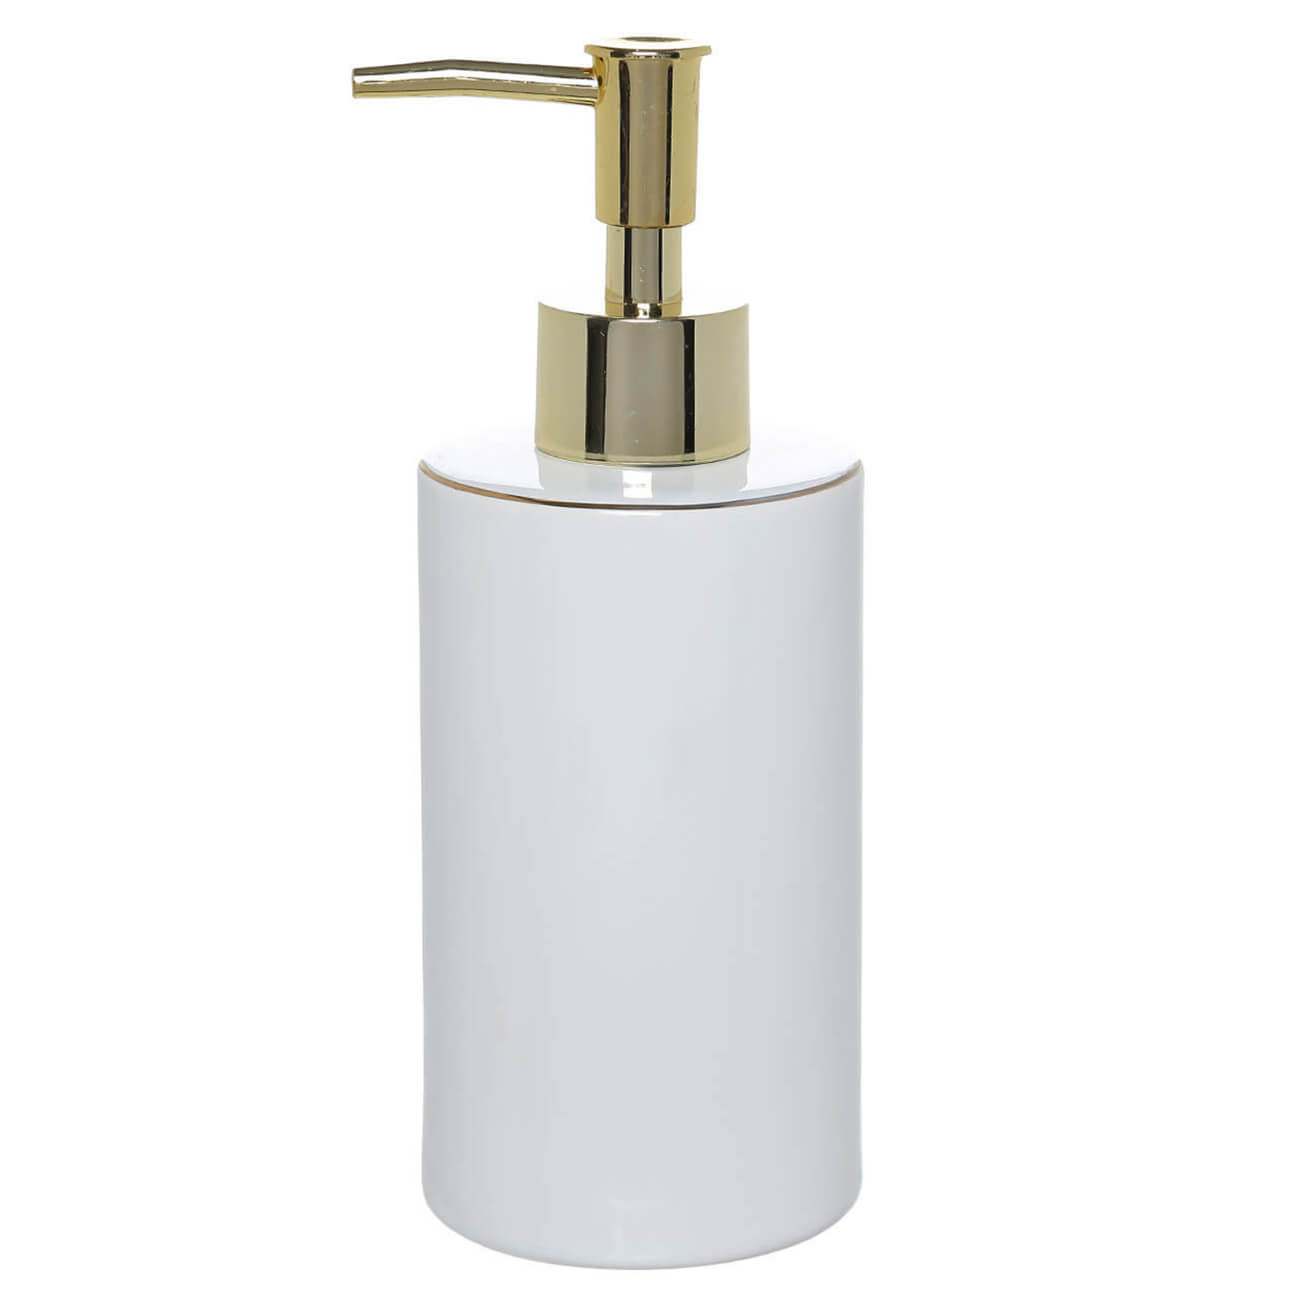 Liquid soap dispenser, 330 ml, ceramic / plastic, white and gold, Freya изображение № 1